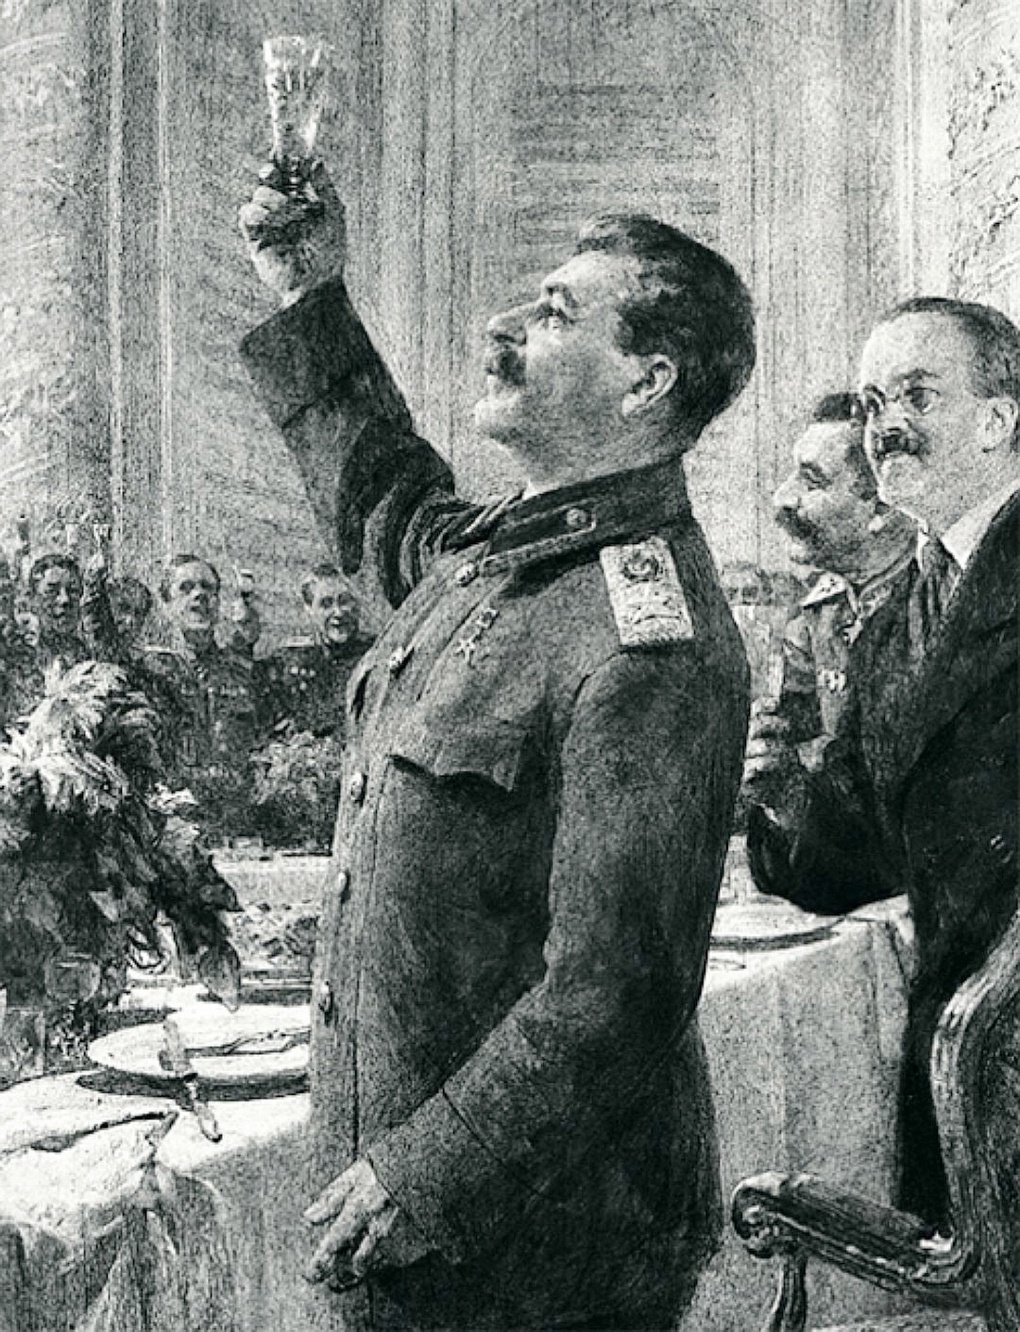 Сталин с рюмкой произносит тост (картина П.В. Малькова).